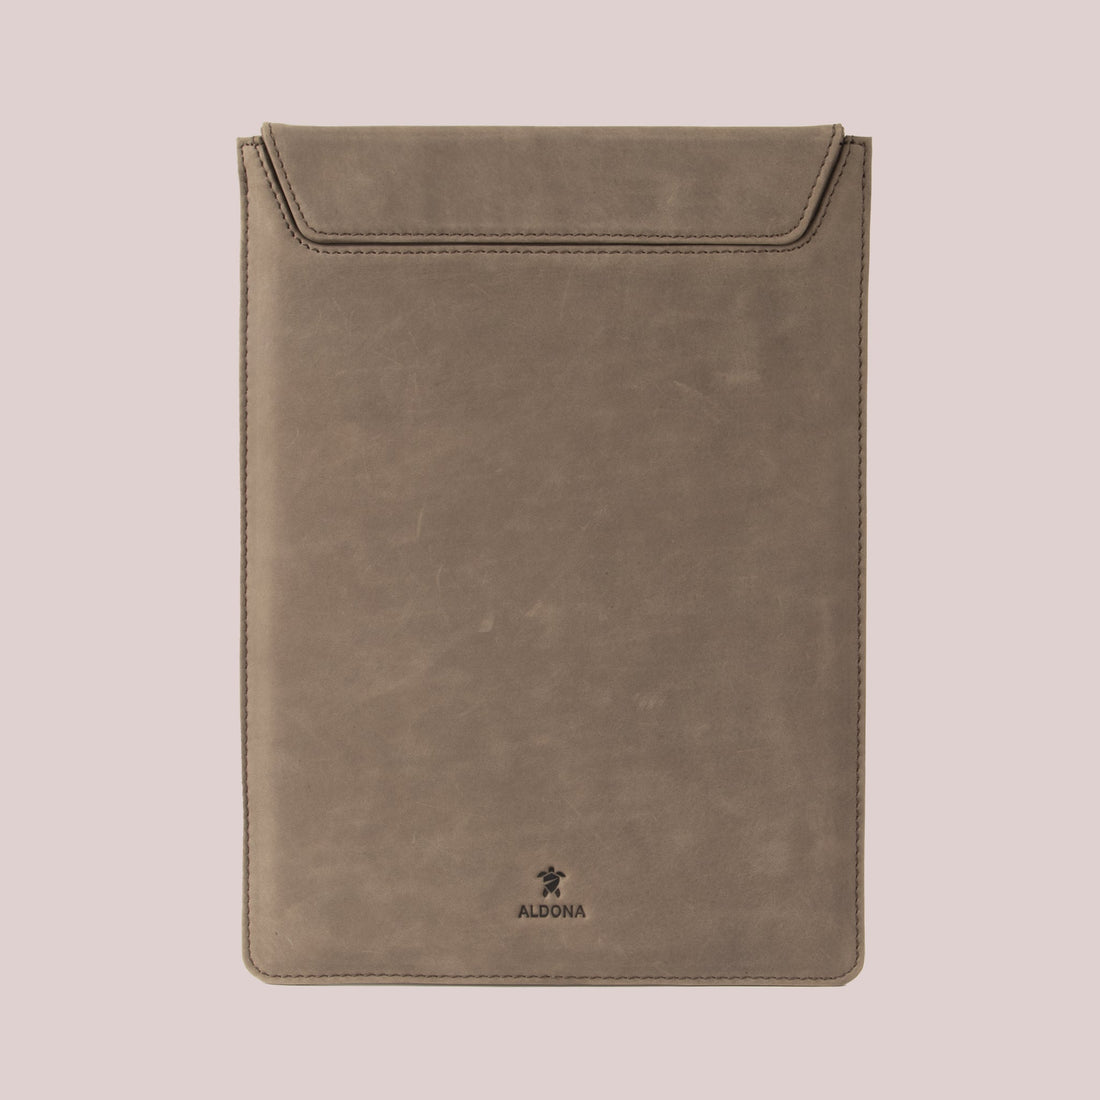 Macbook leather case in tan color